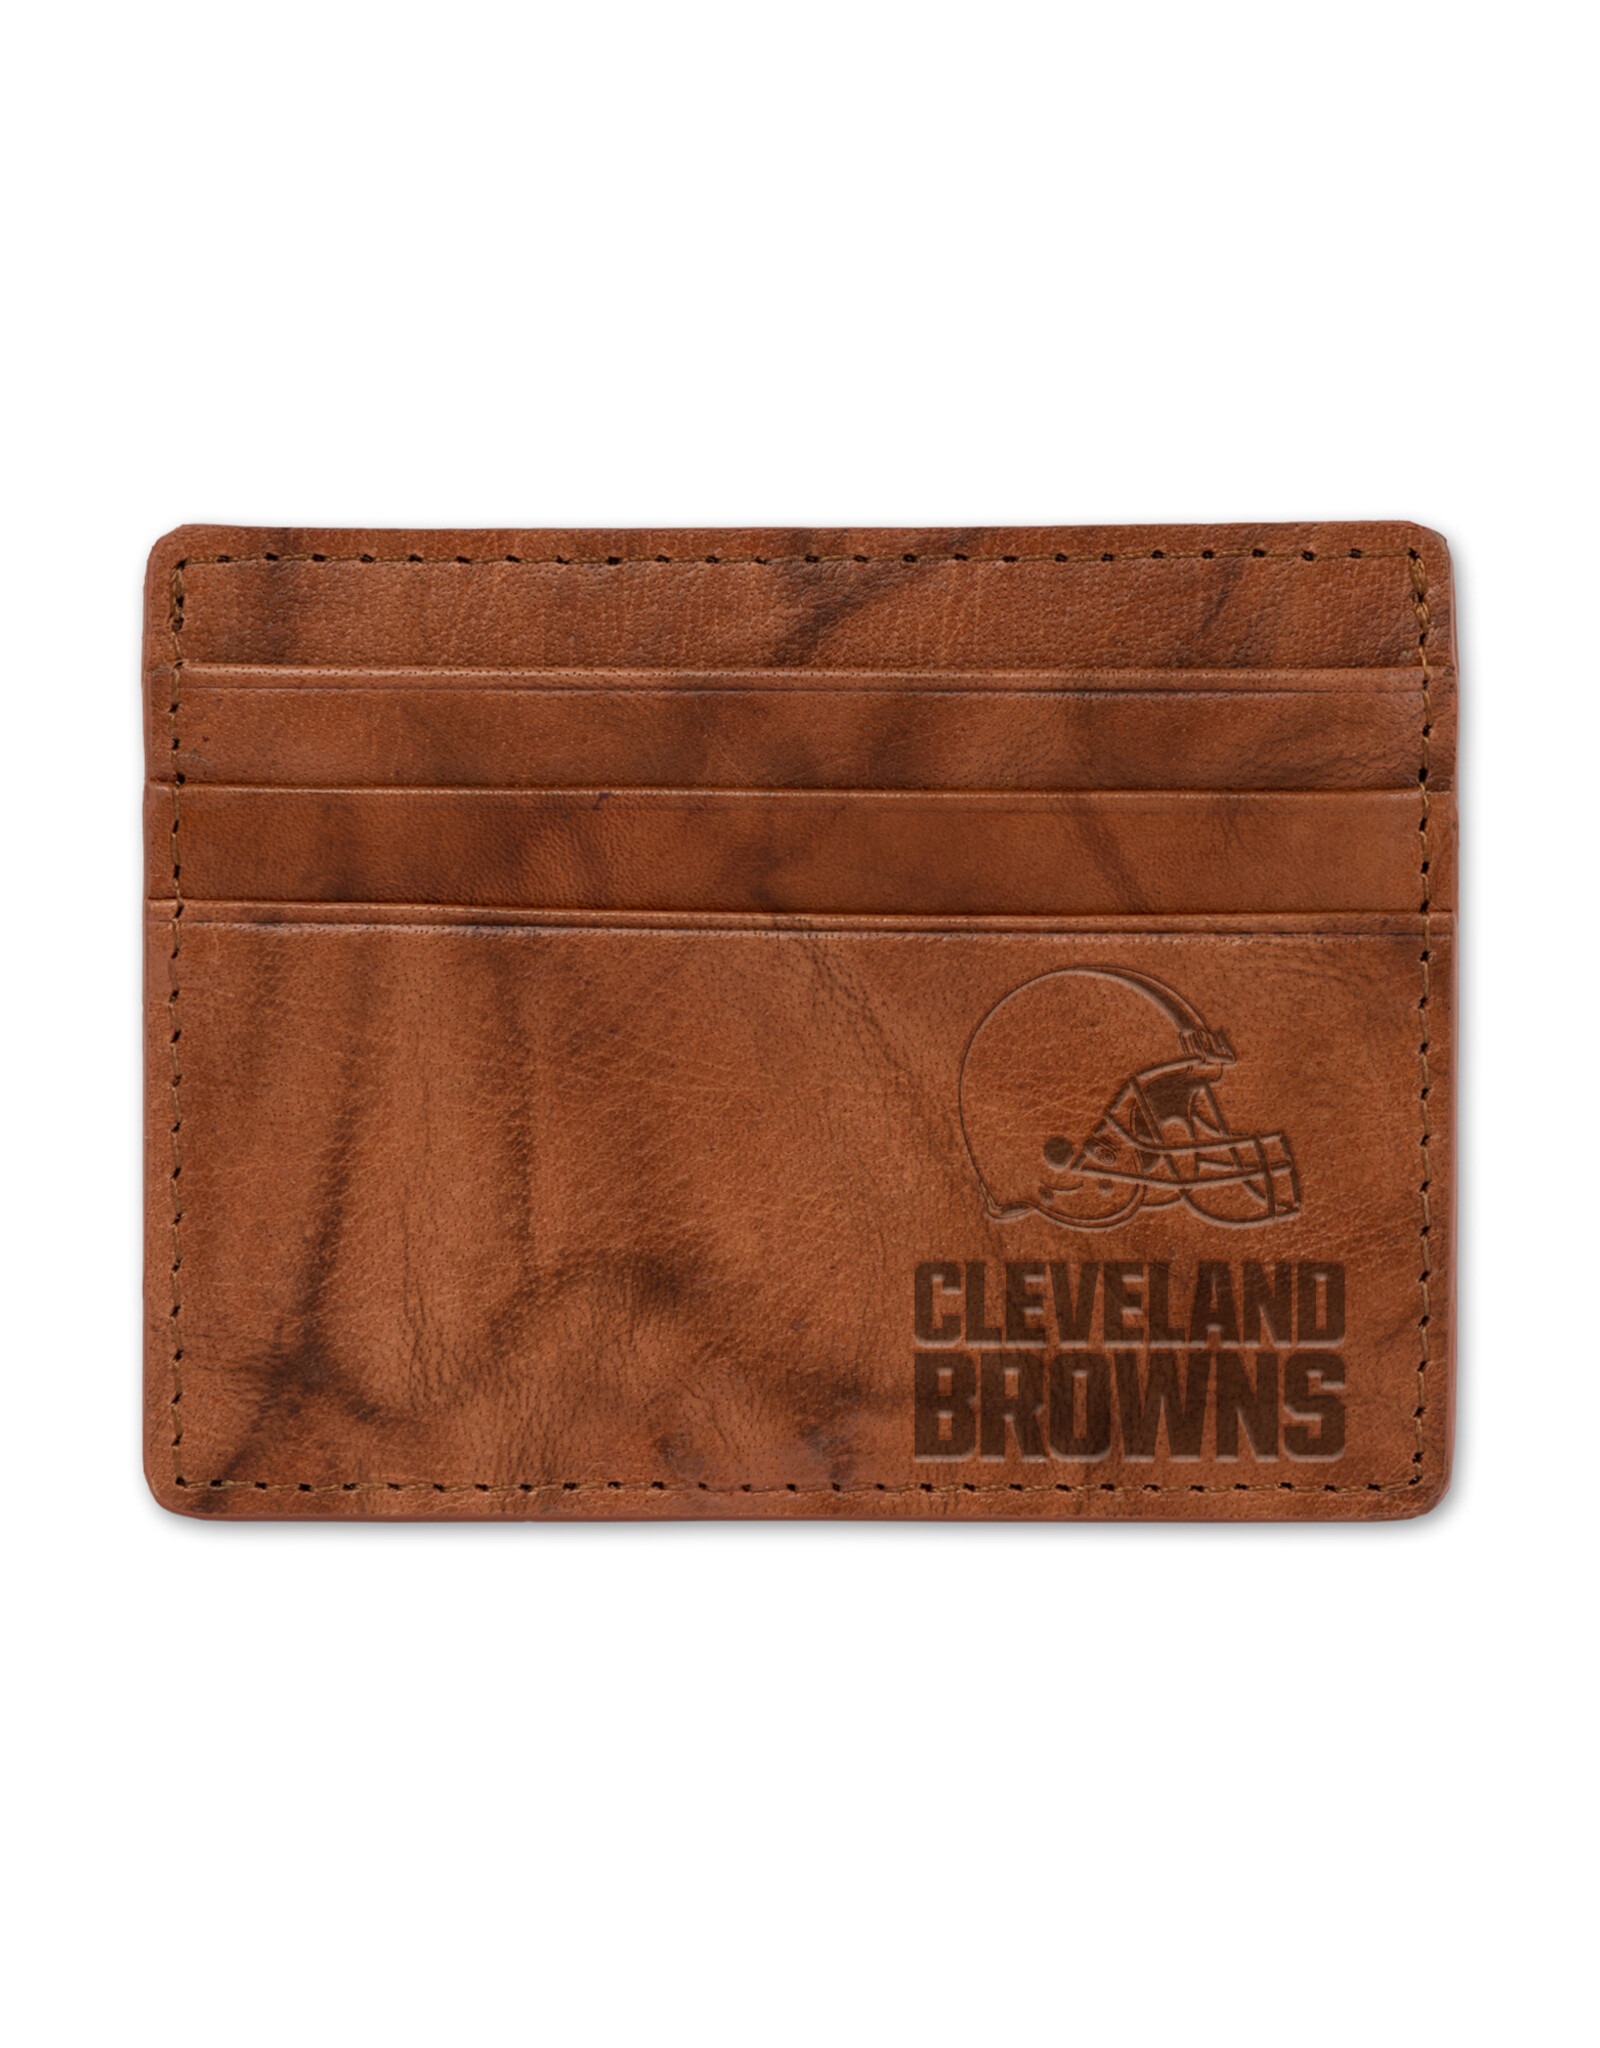 RICO INDUSTRIES Cleveland Browns 2-in-1 Vintage Slider Billfold Wallet Set